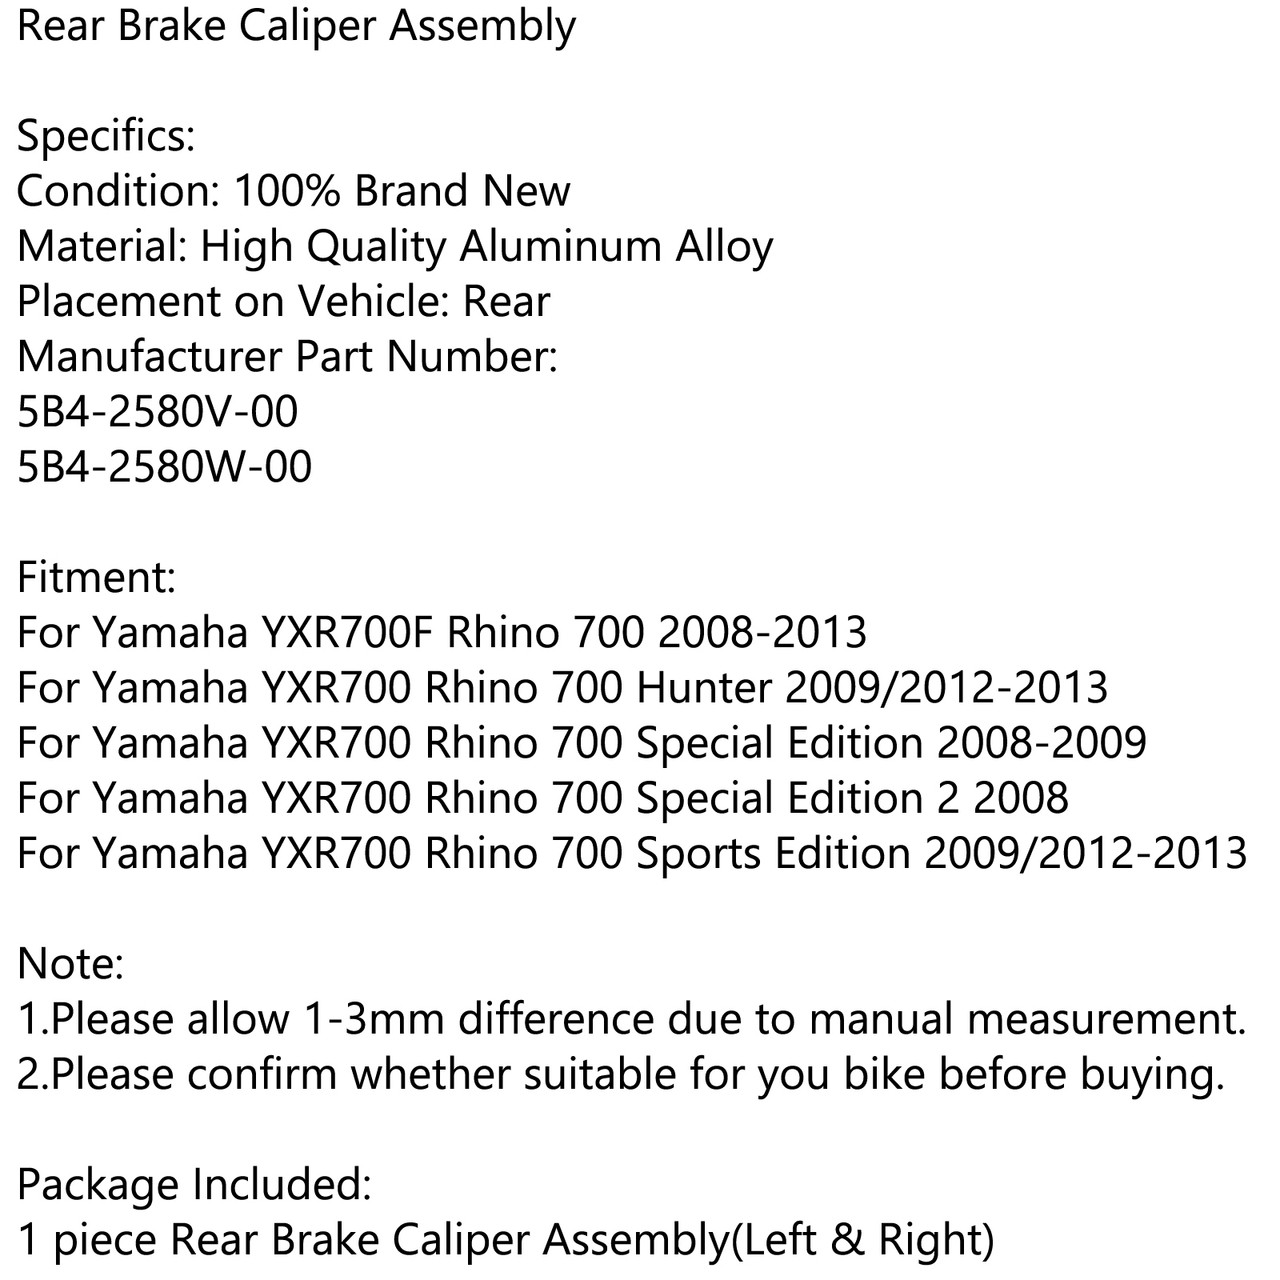 Rear Brake Caliper Assembly For Yamaha YXR700F Rhino 700 08-13 700 Hunter 09/12-13 Special Edition 08-09 Sports Edition 09/12-13 Silver